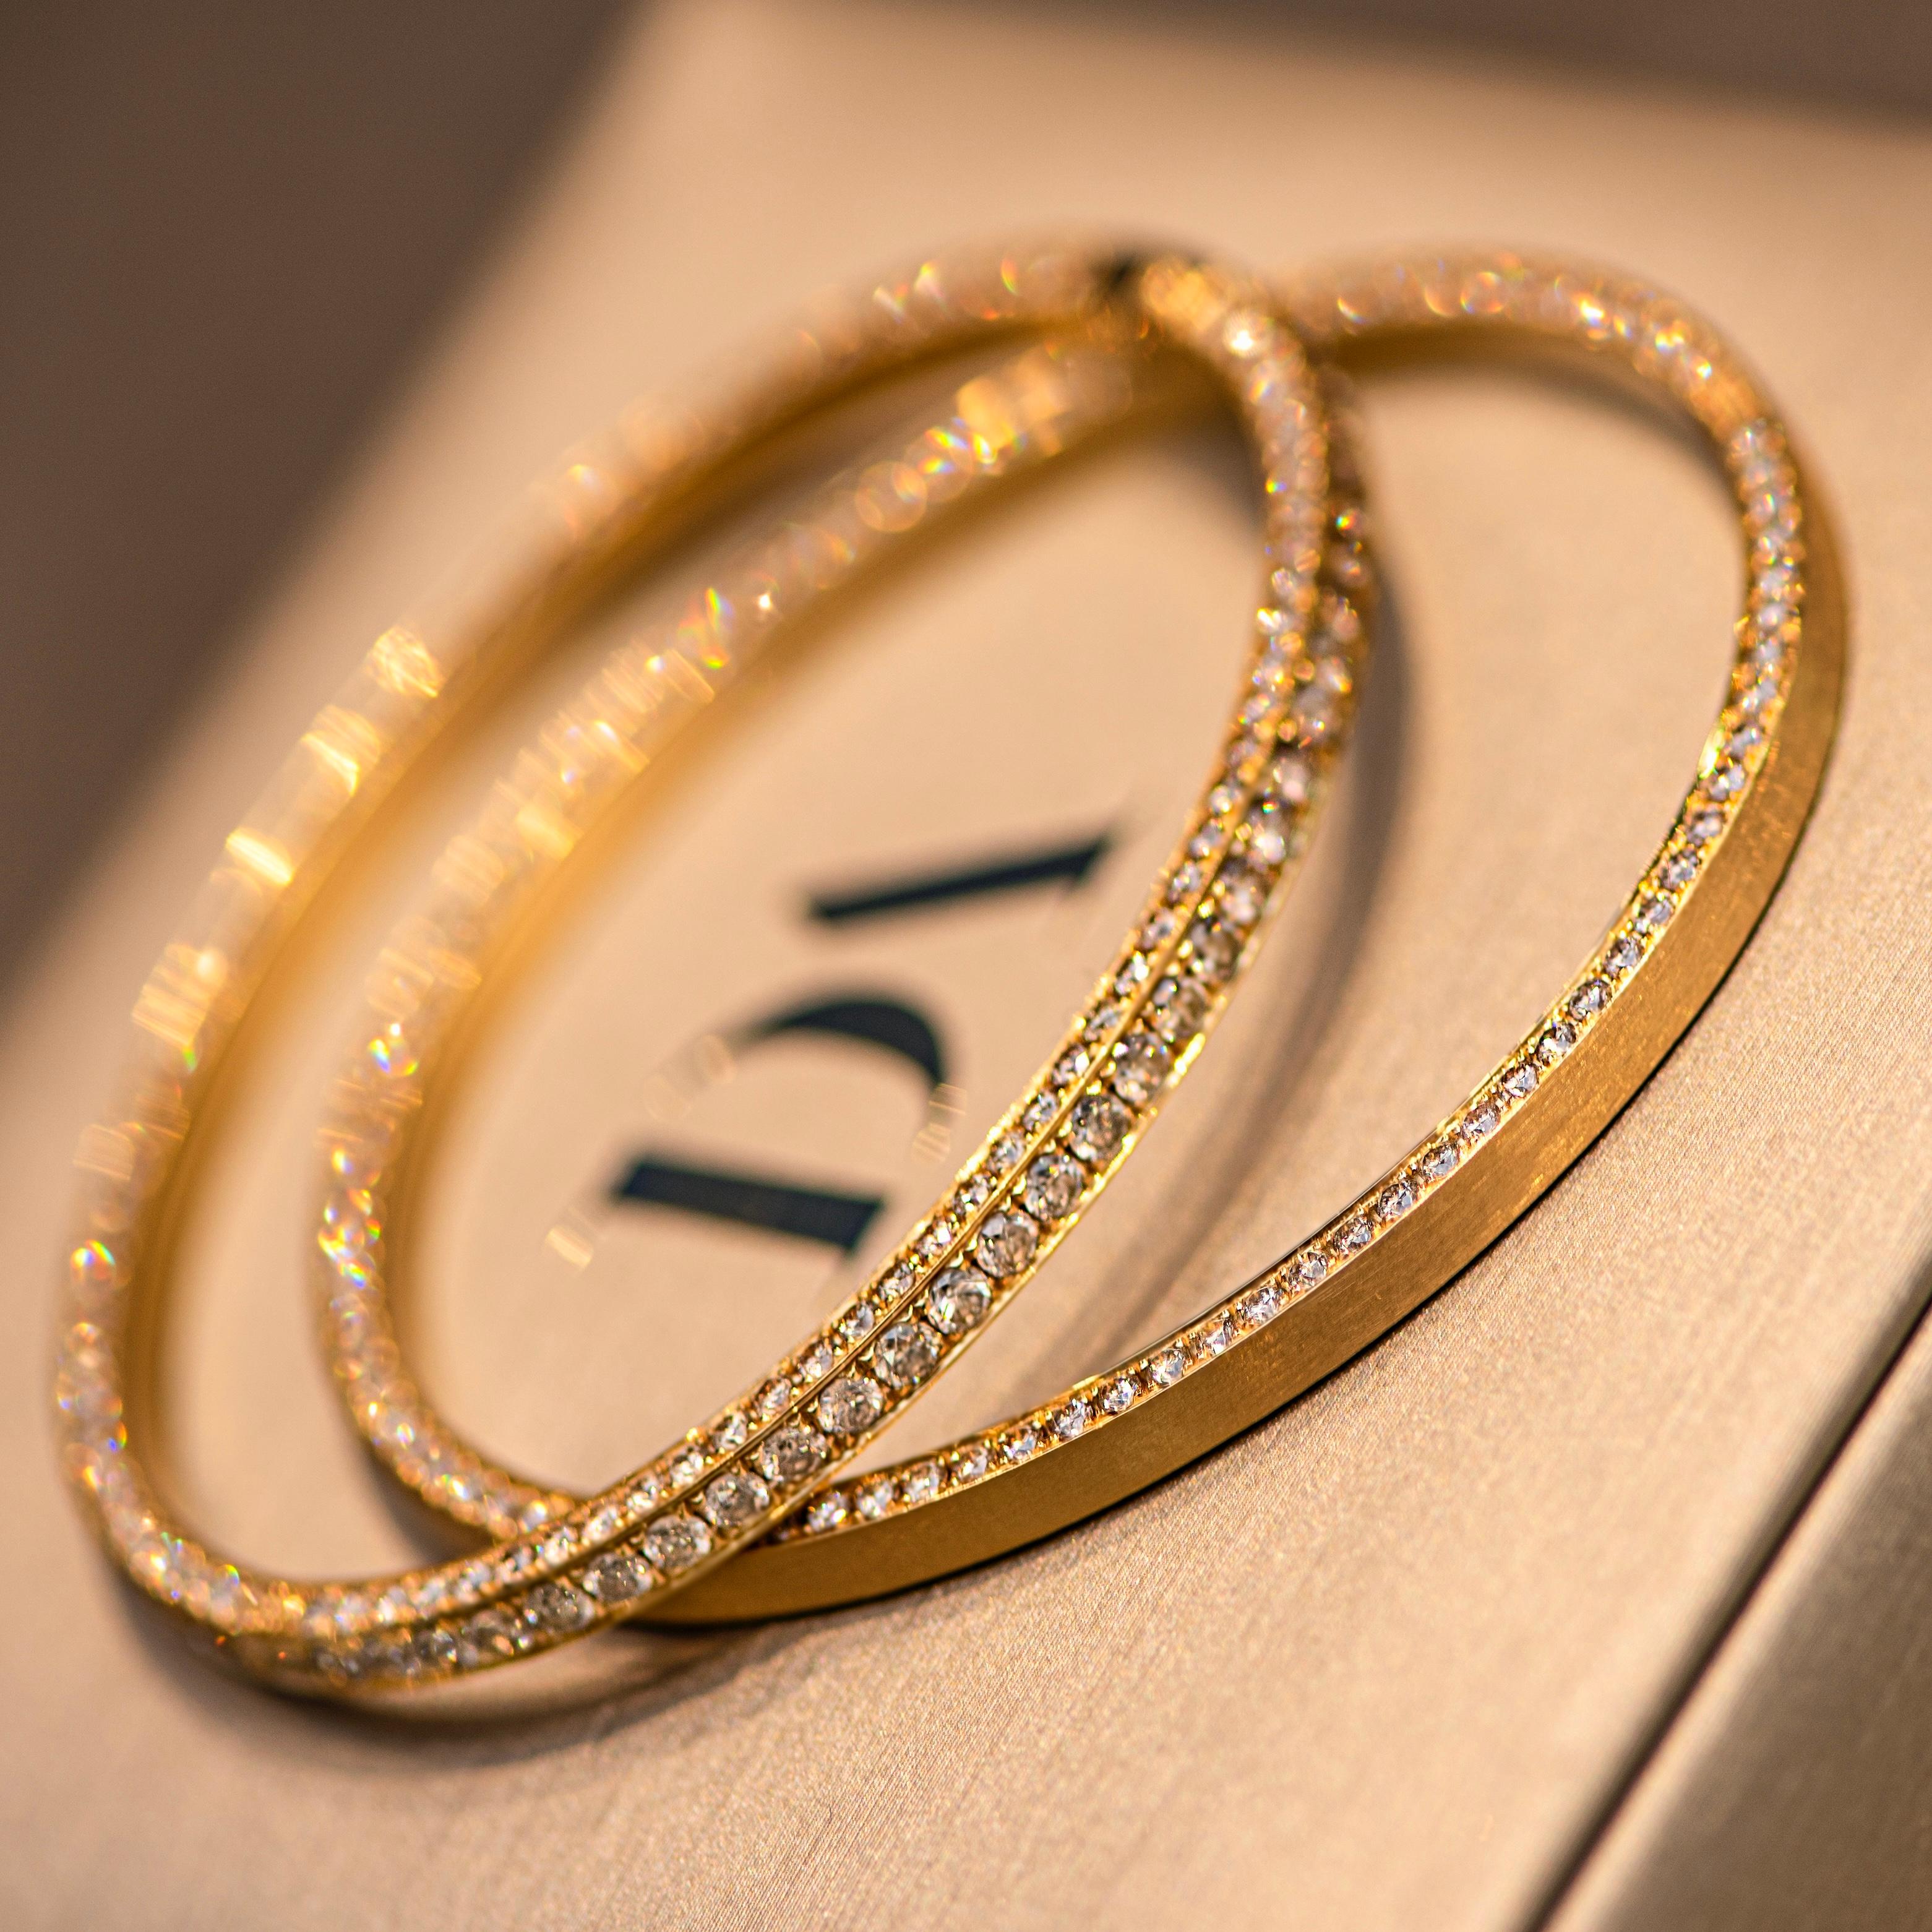 19 carat gold bracelet